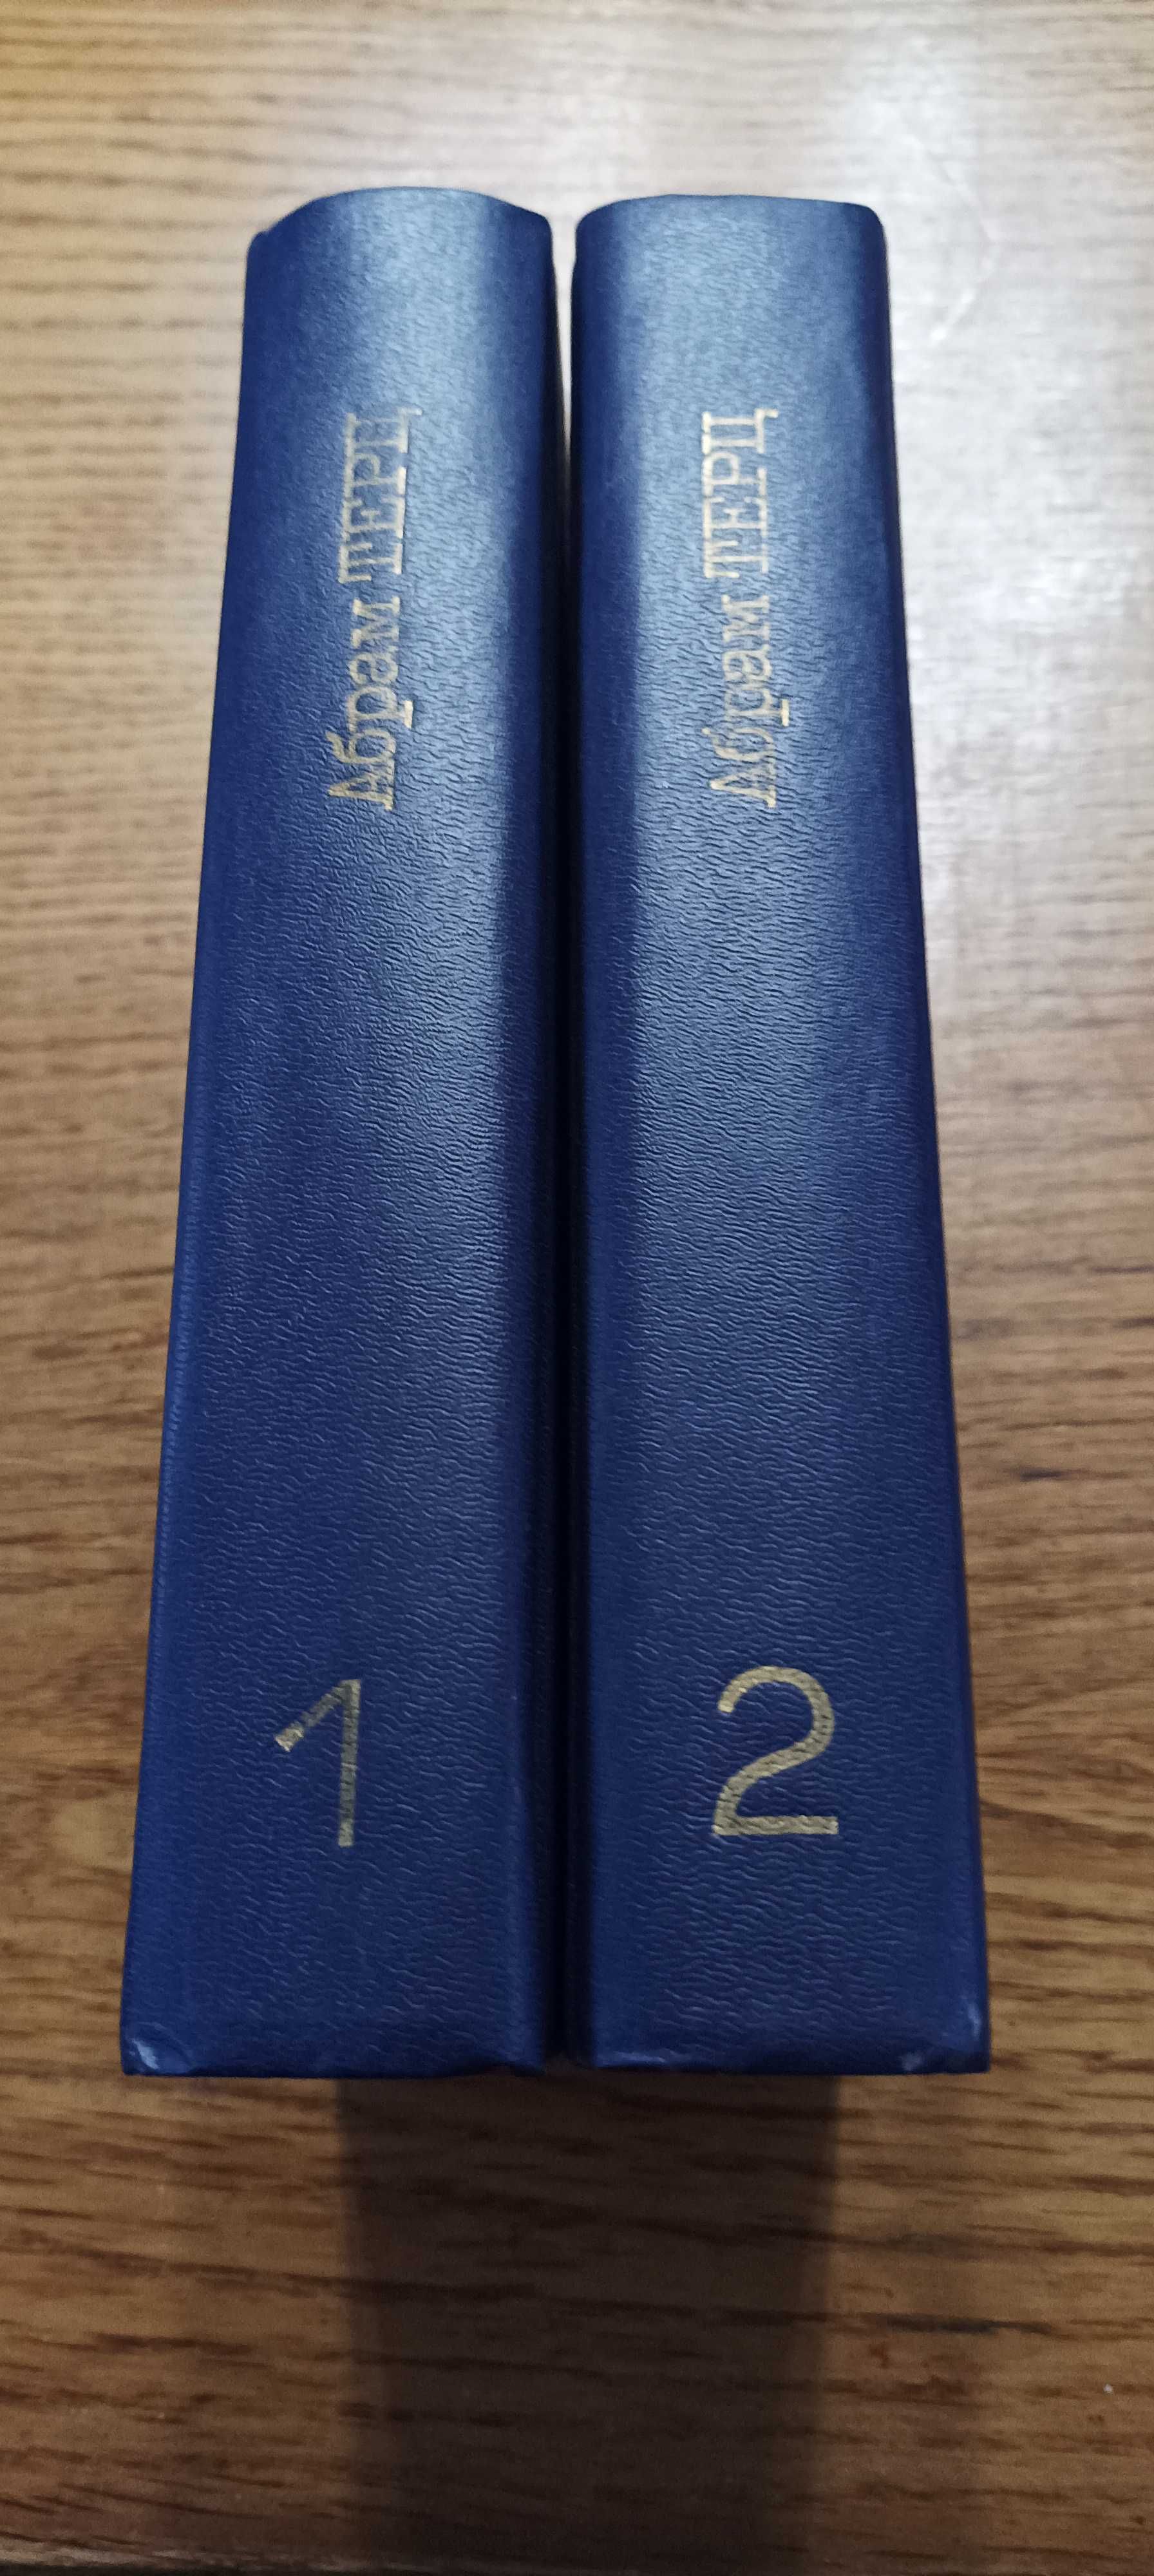 Абрам Терц (Синявский А. Д.) Собрание сочинений в 2 томах